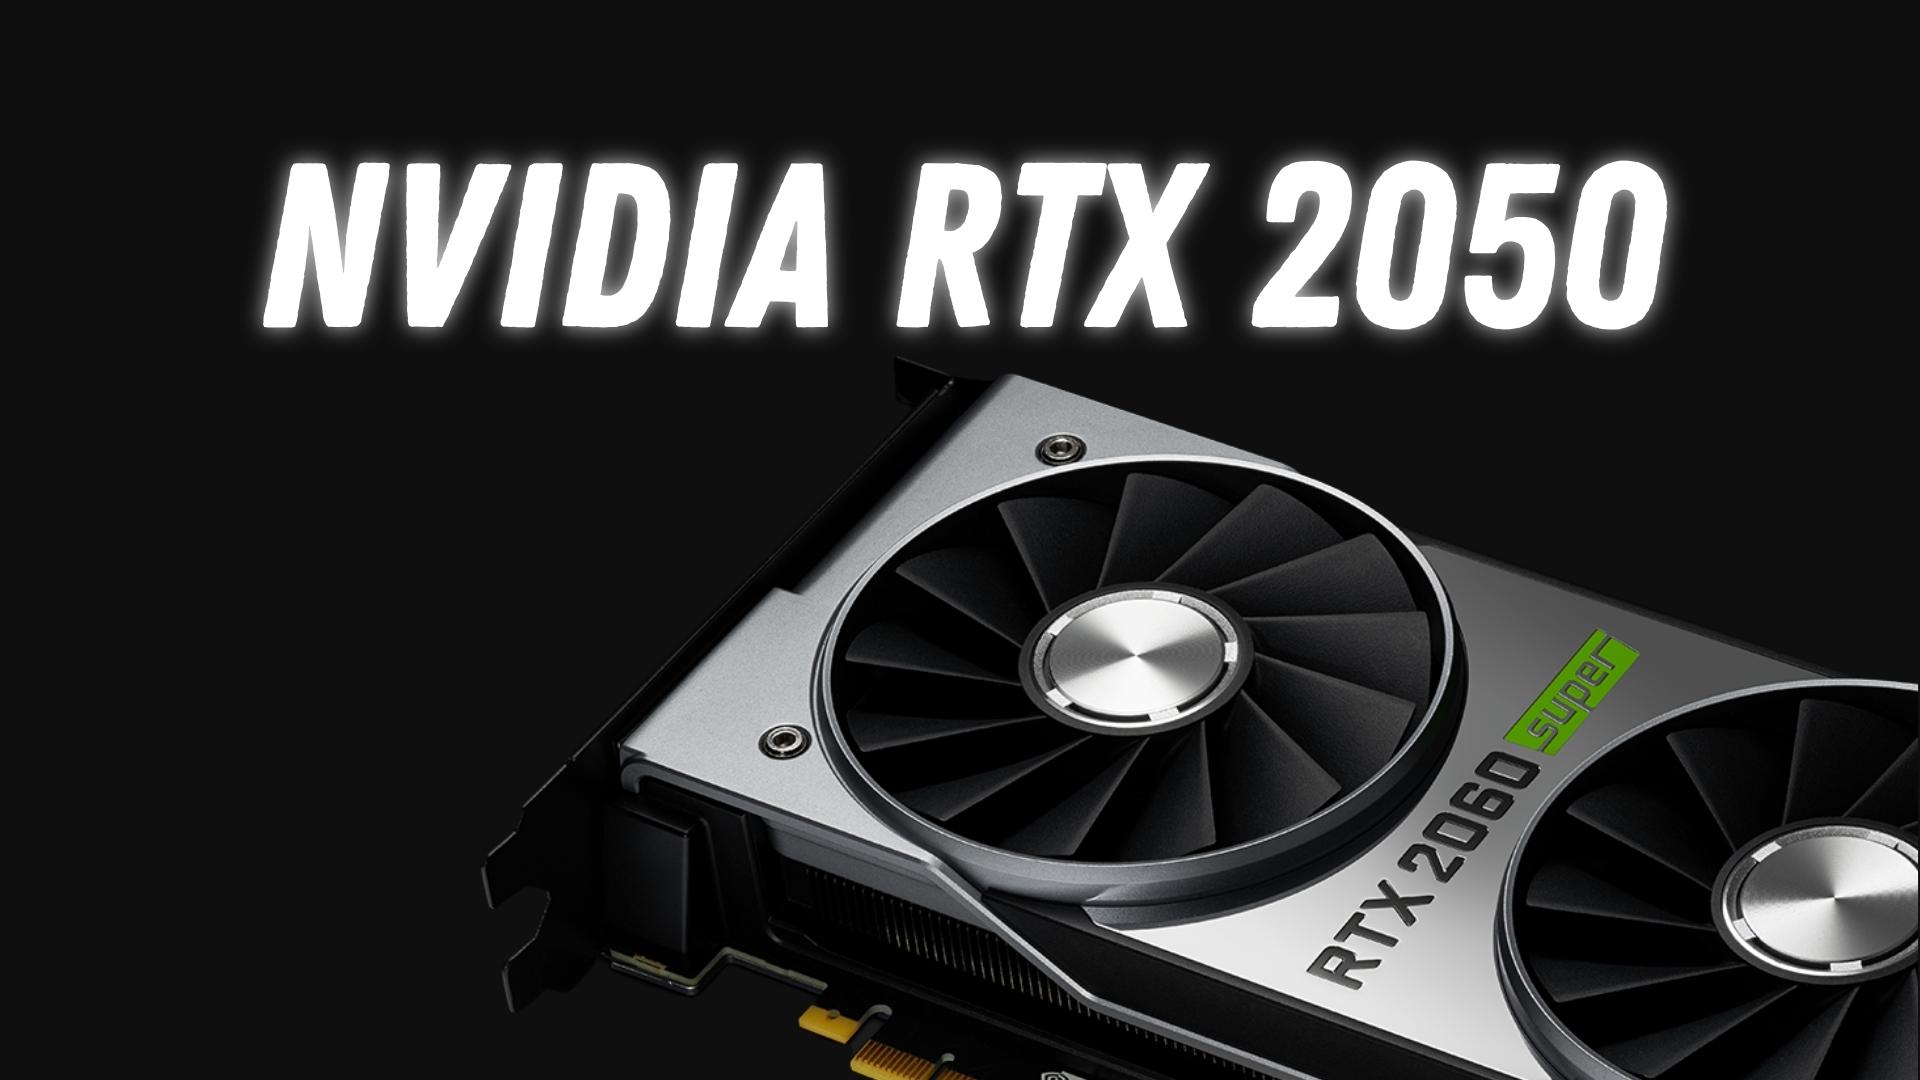 Van Optøjer tin Nvidia RTX 2050 laptop GPU might power affordable laptops - TrueTech